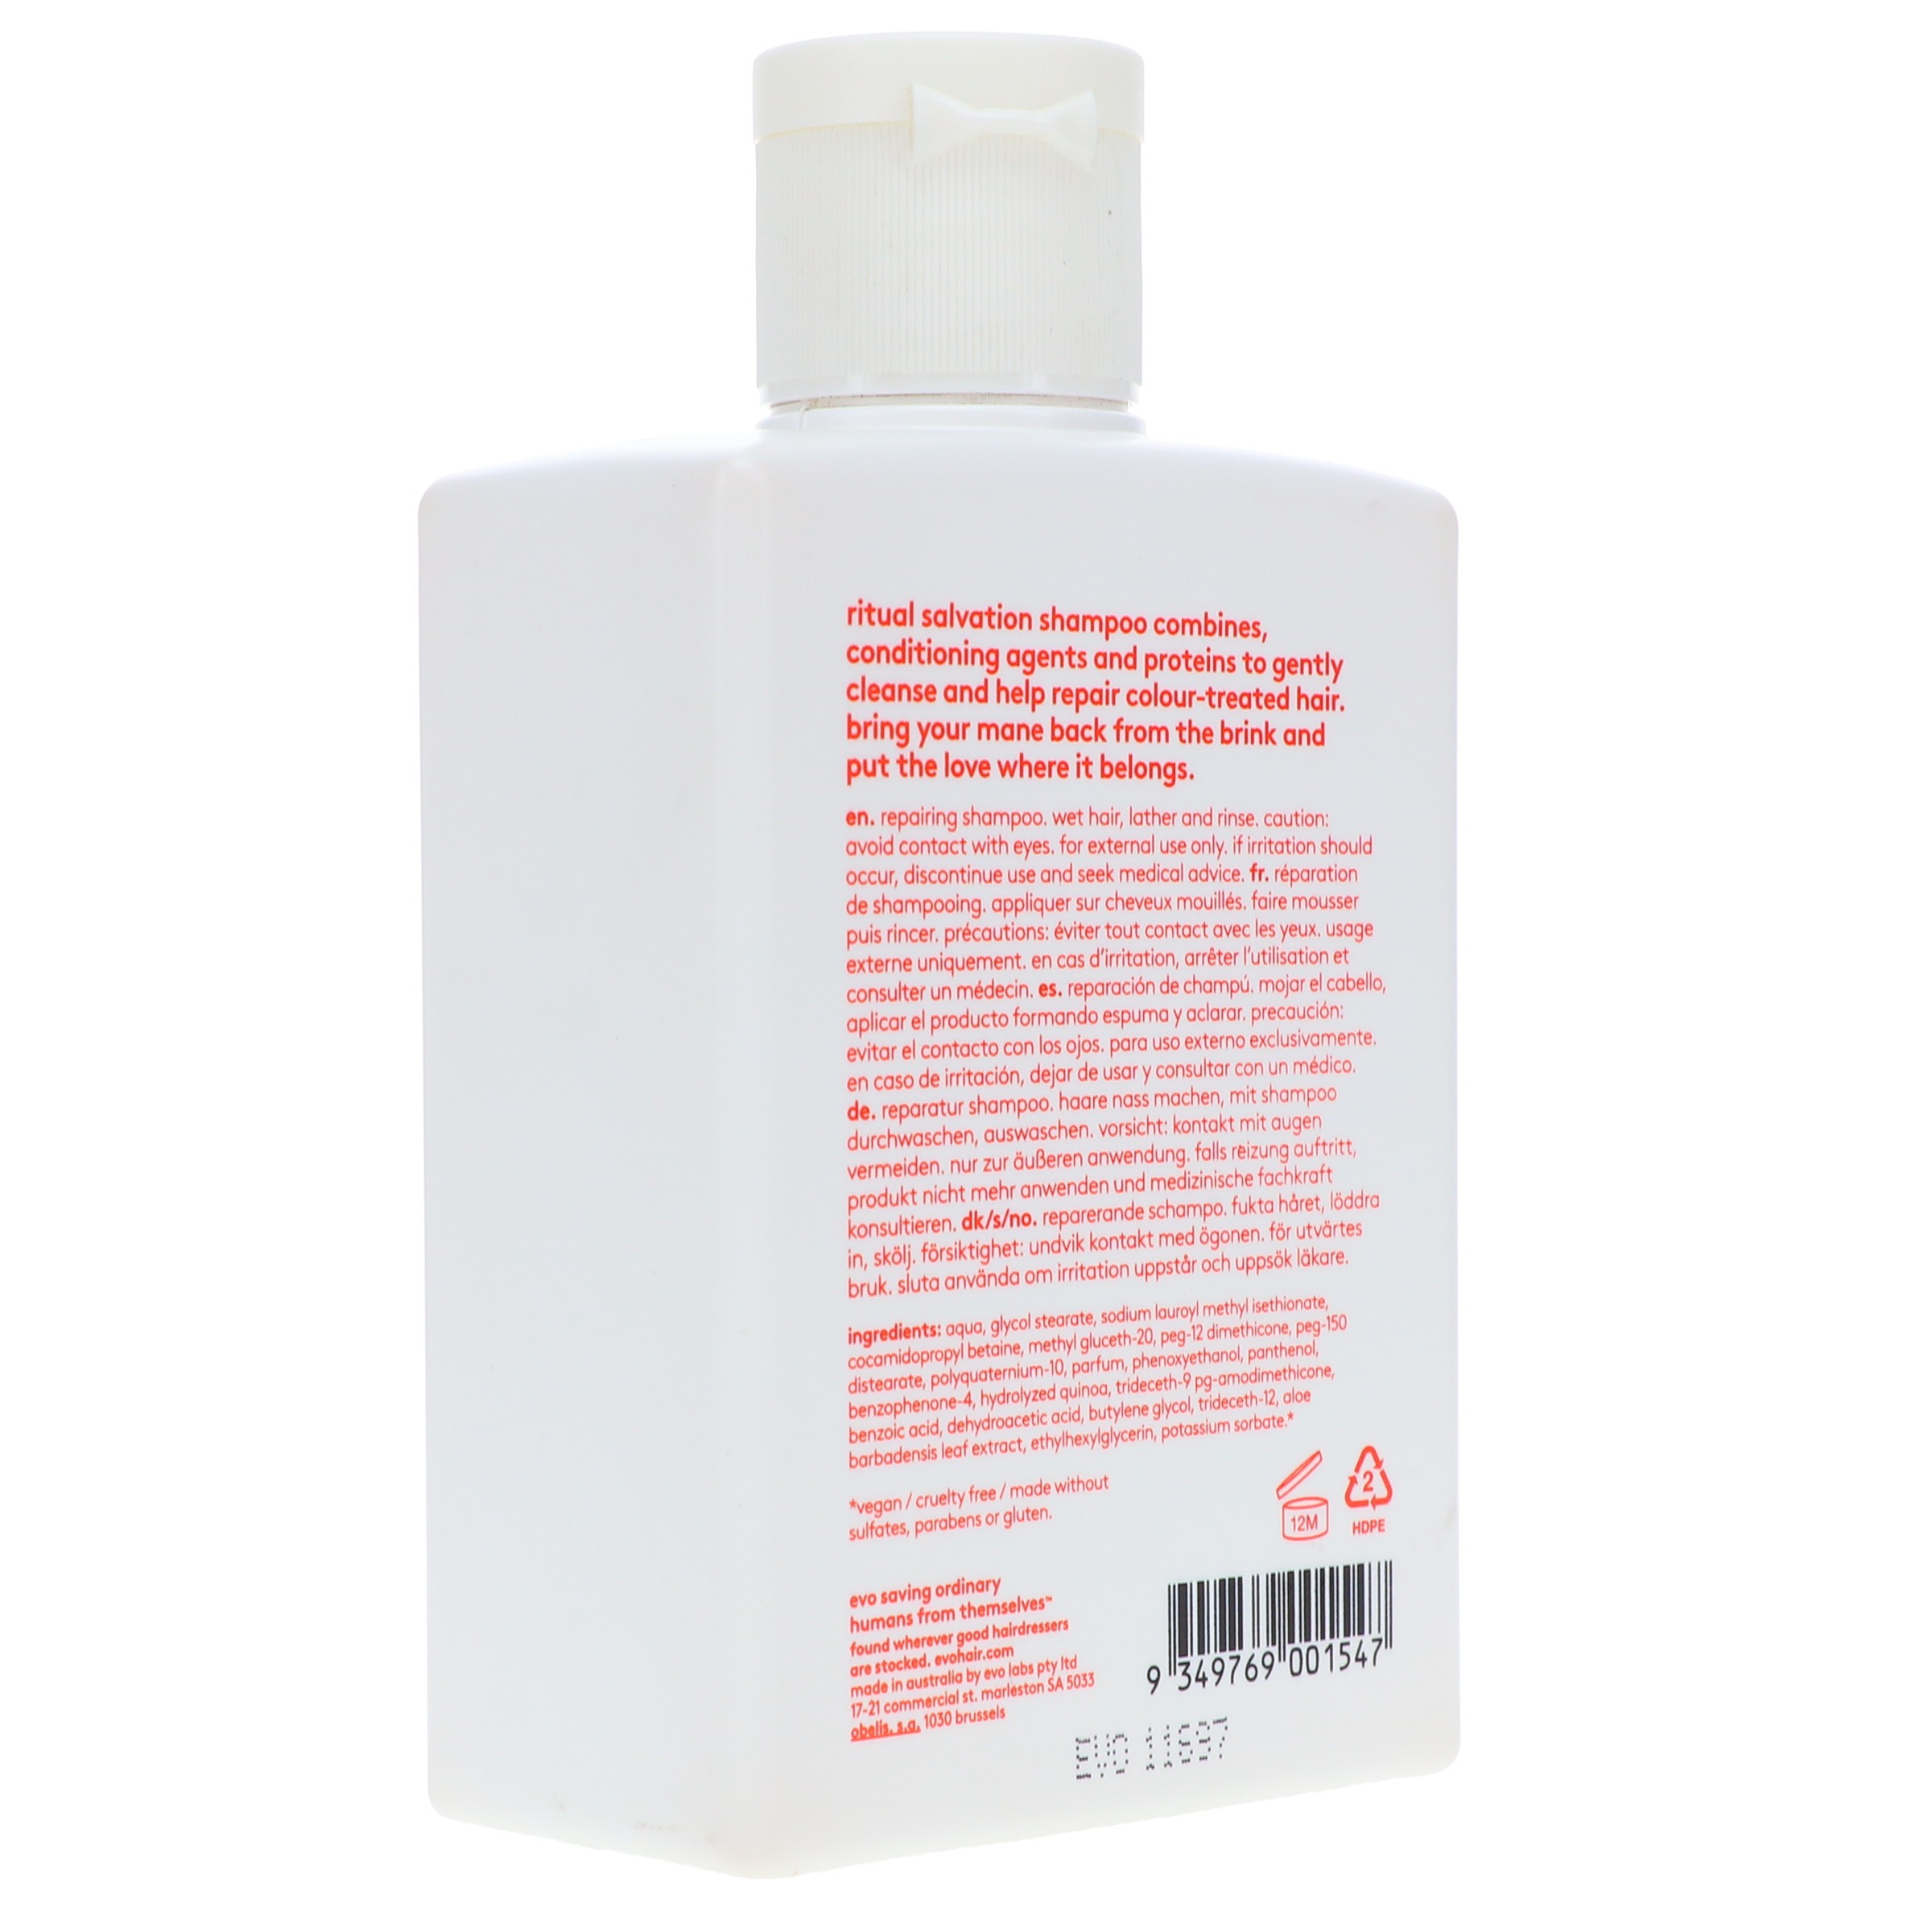 Mona Lisa Thorns Anklage EVO Ritual Salvation Care Shampoo 10.14 oz ~ Beauty Roulette